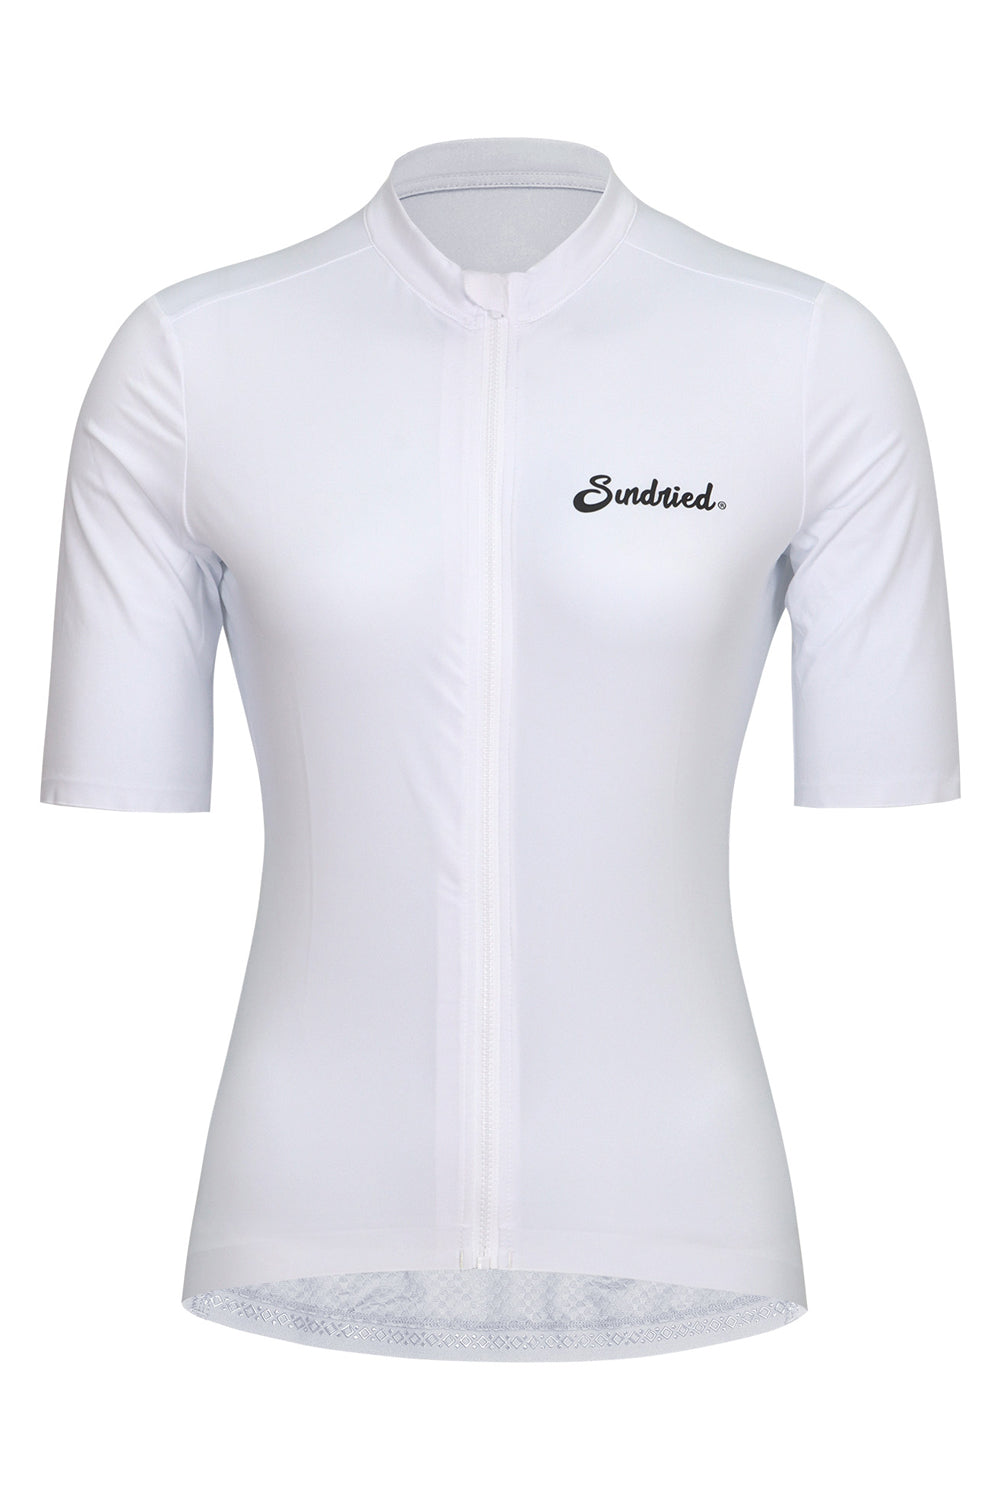 Sundried Sport Pianura Women's White Short Sleeve Cycle Jersey Short Sleeve Jersey XS SS1002 XS White Activewear